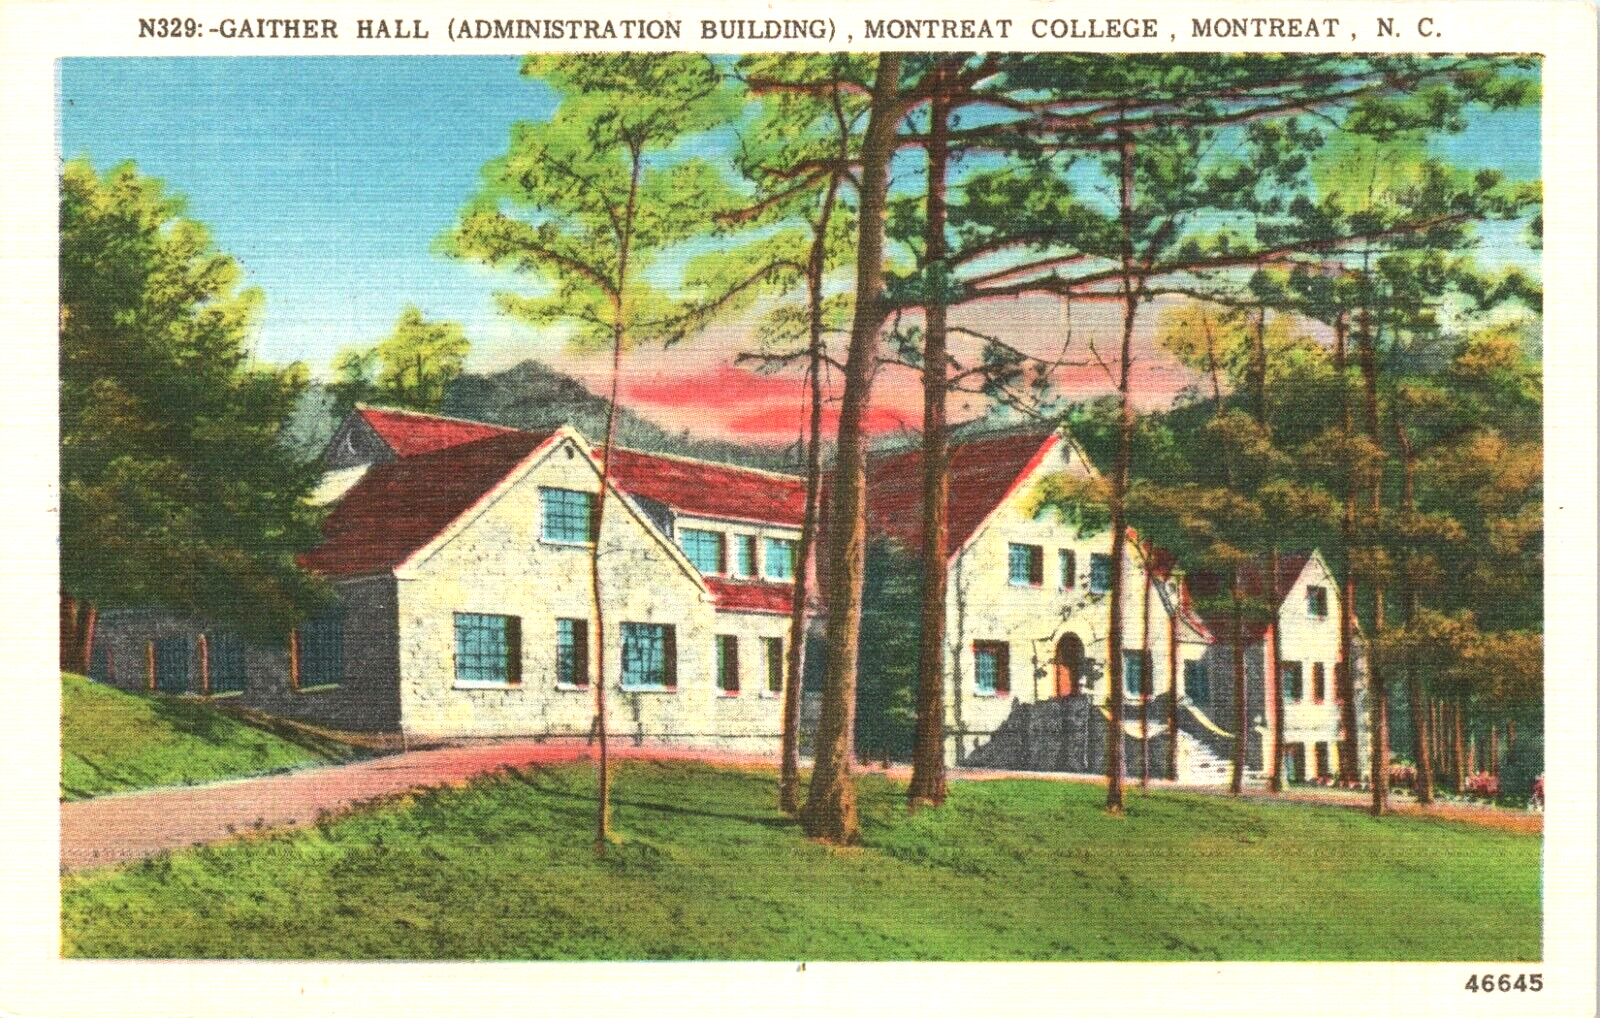 Montreat North Carolina College Gaither Hall Administration Building Postcard